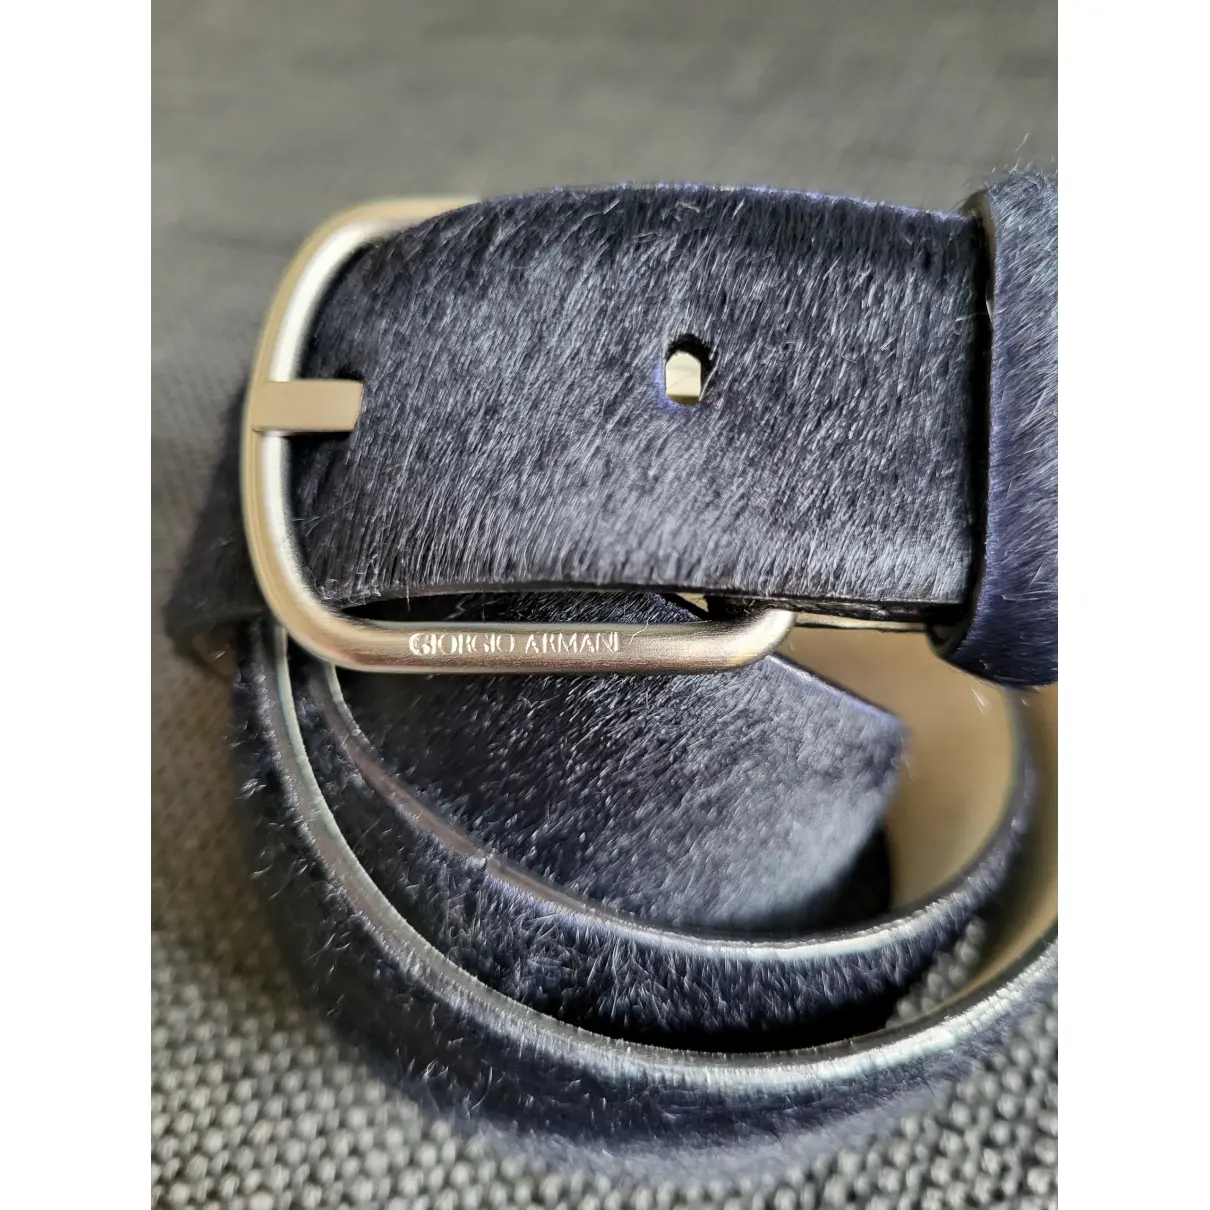 Buy Giorgio Armani Exotic leathers belt online